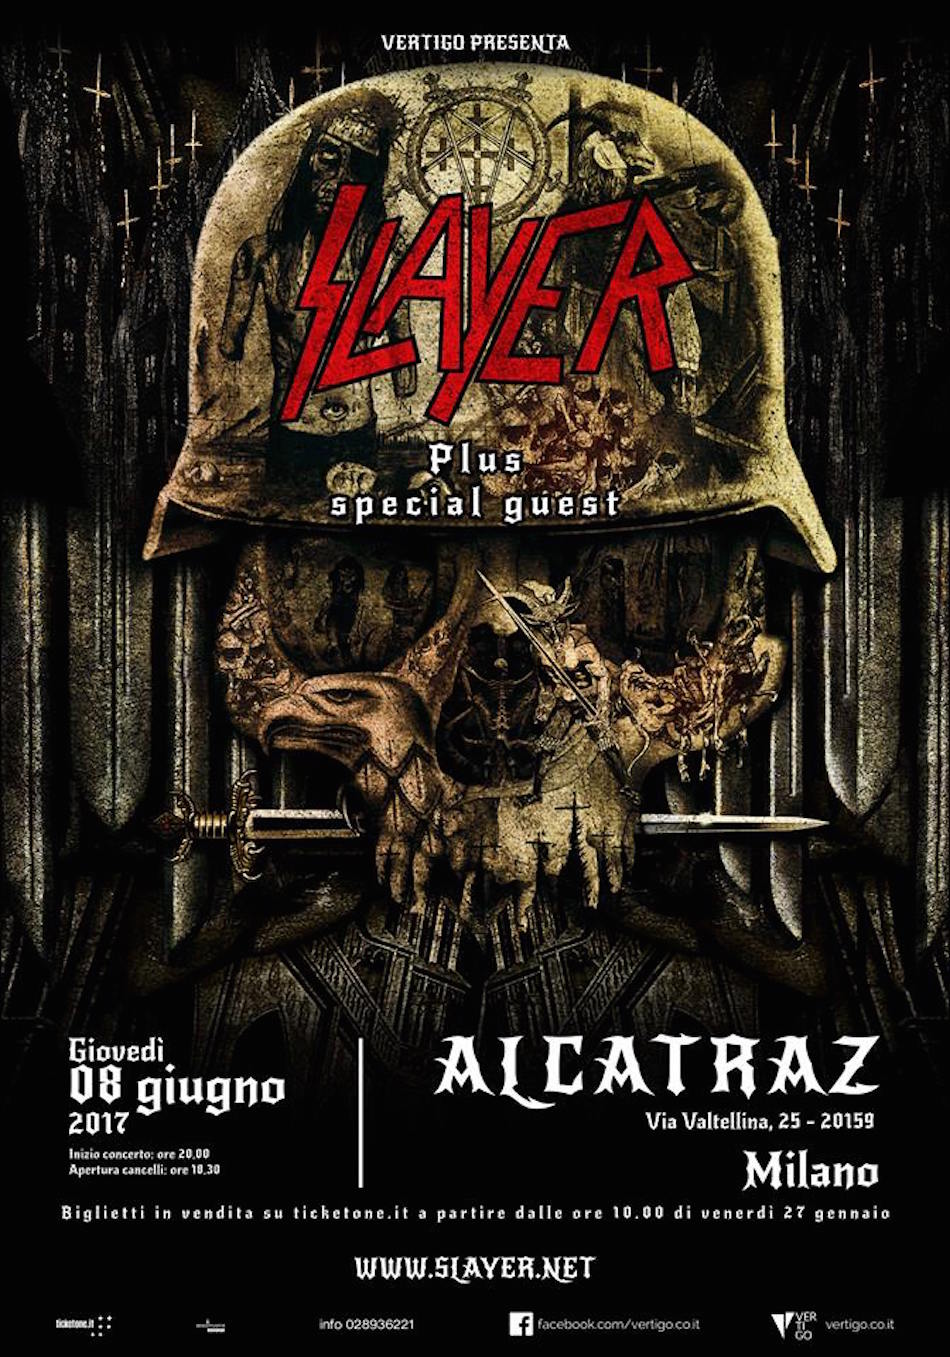 Slayer Italia